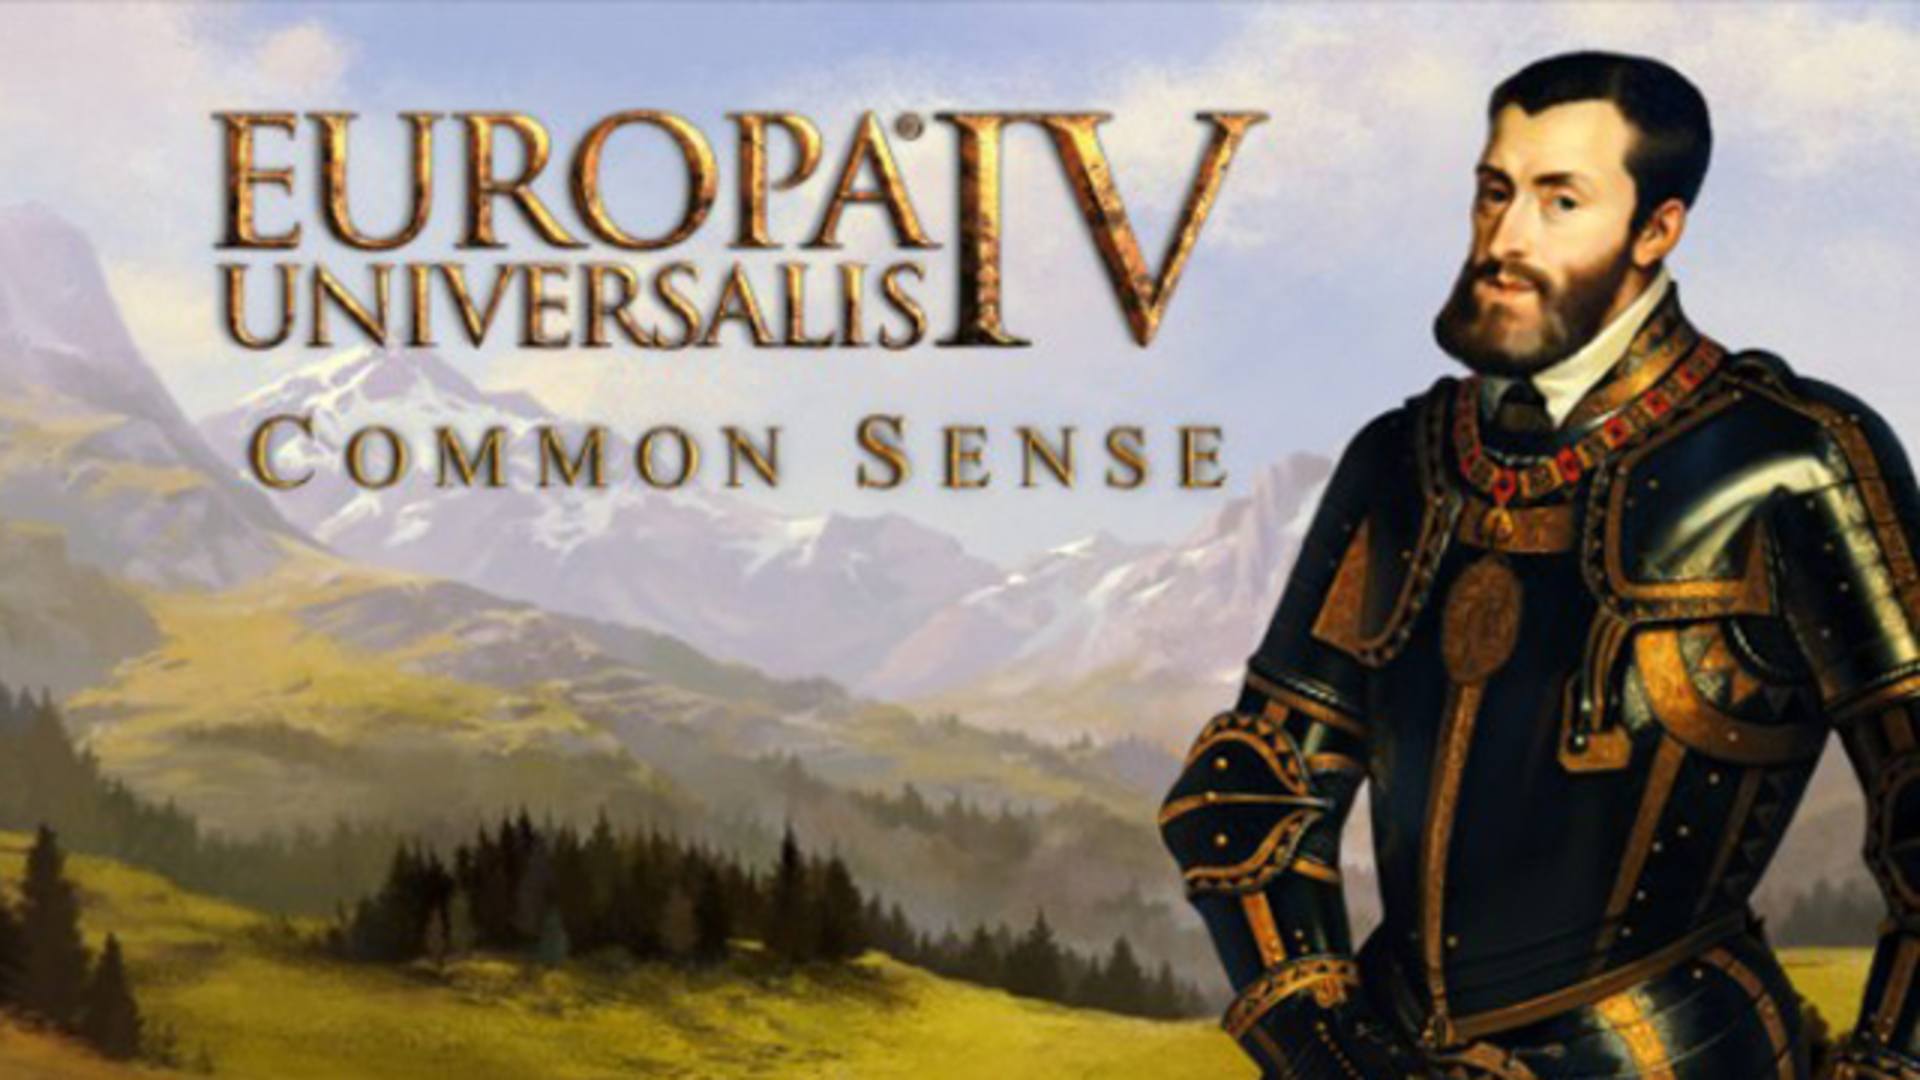 europa universalis 4 logo